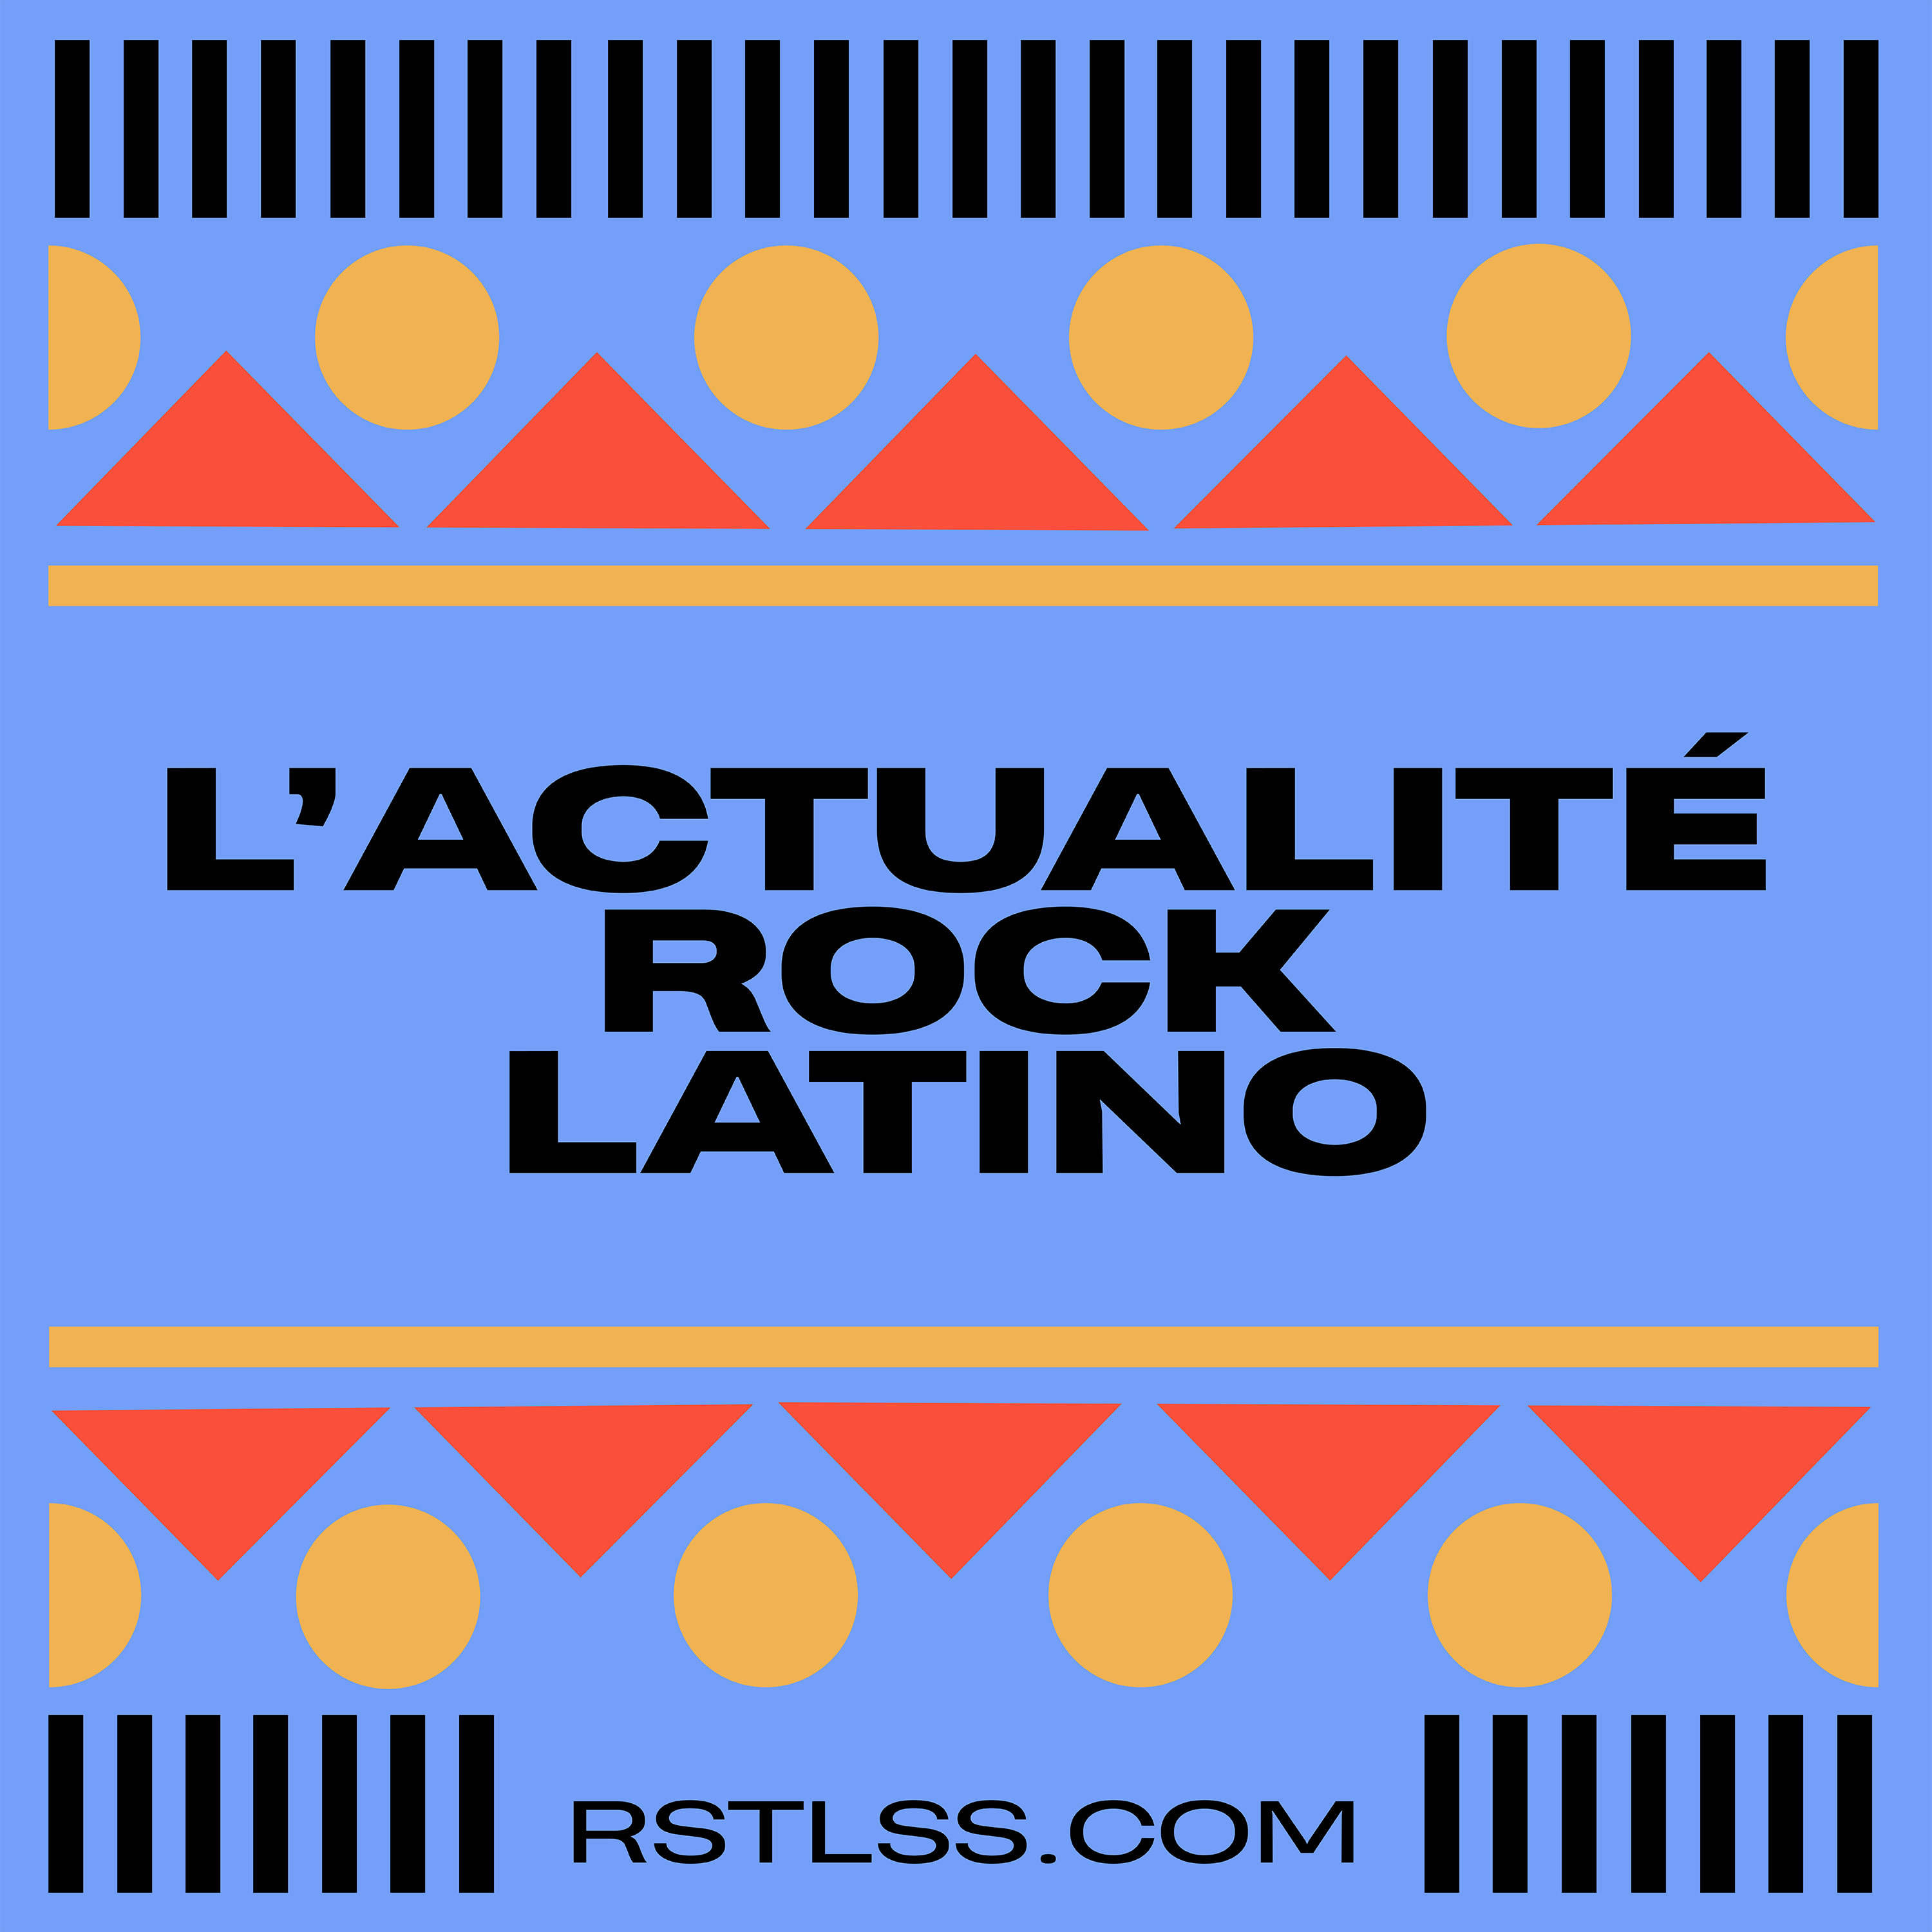 L'Actualité Rock Latino RSTLSS